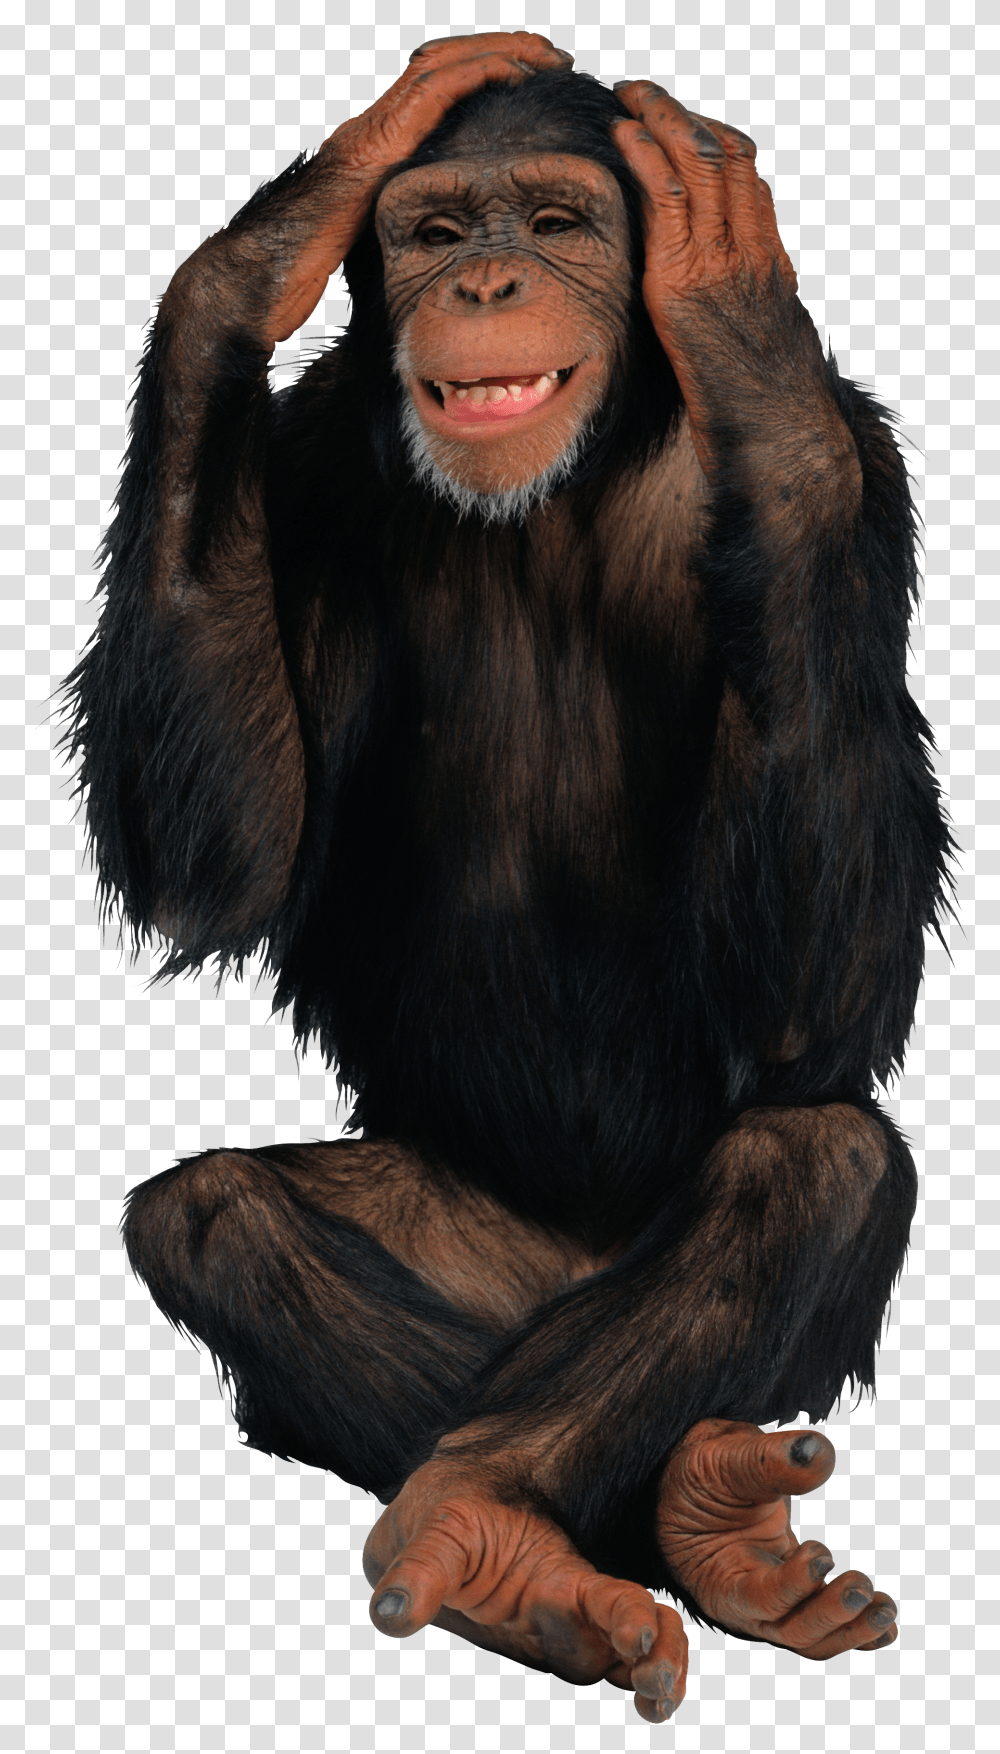 Monkey Icon Clipart Monkey Transparent Png